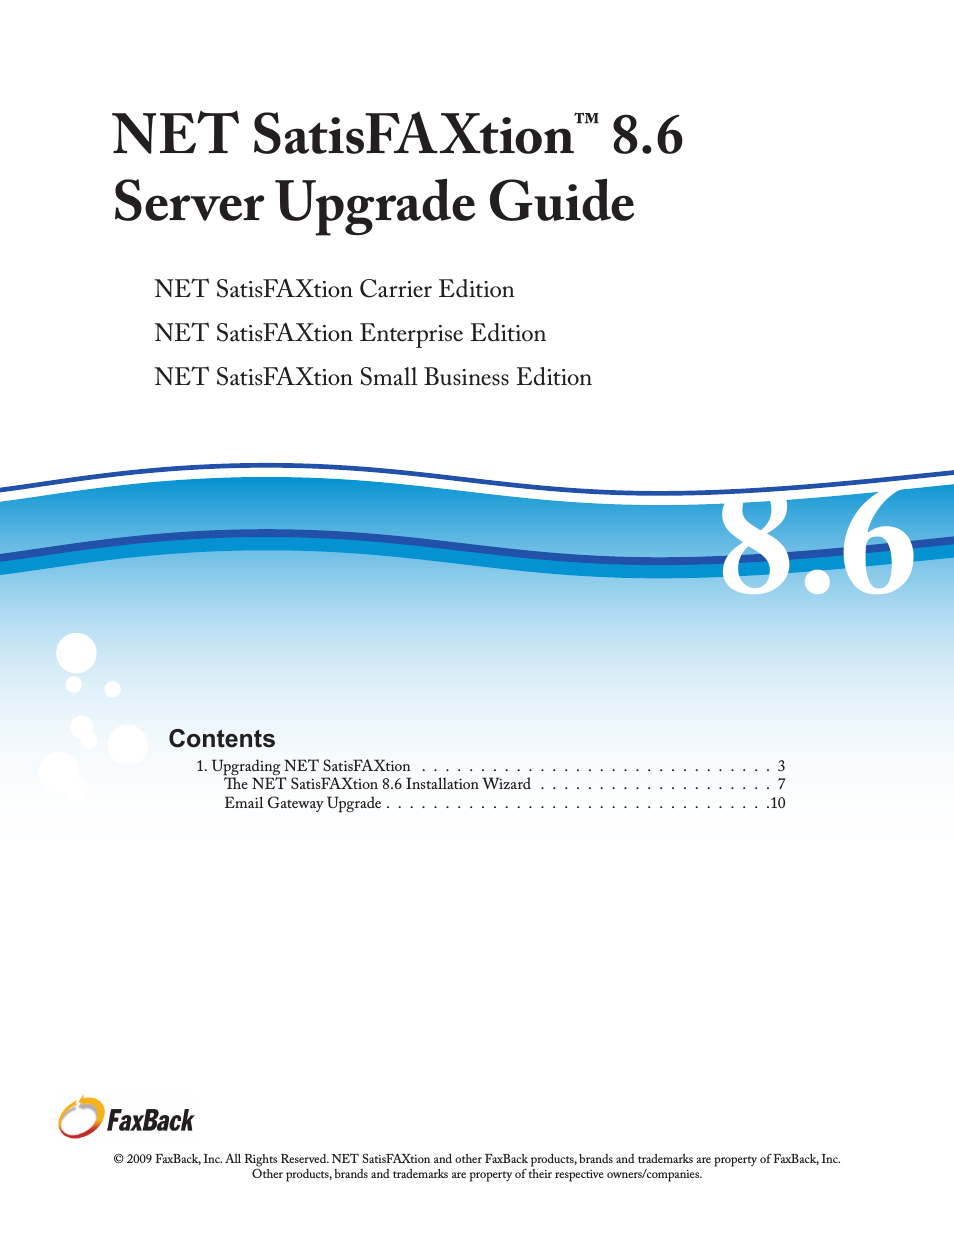 NET SatisFAXtion 8.6 - Upgrade Guide